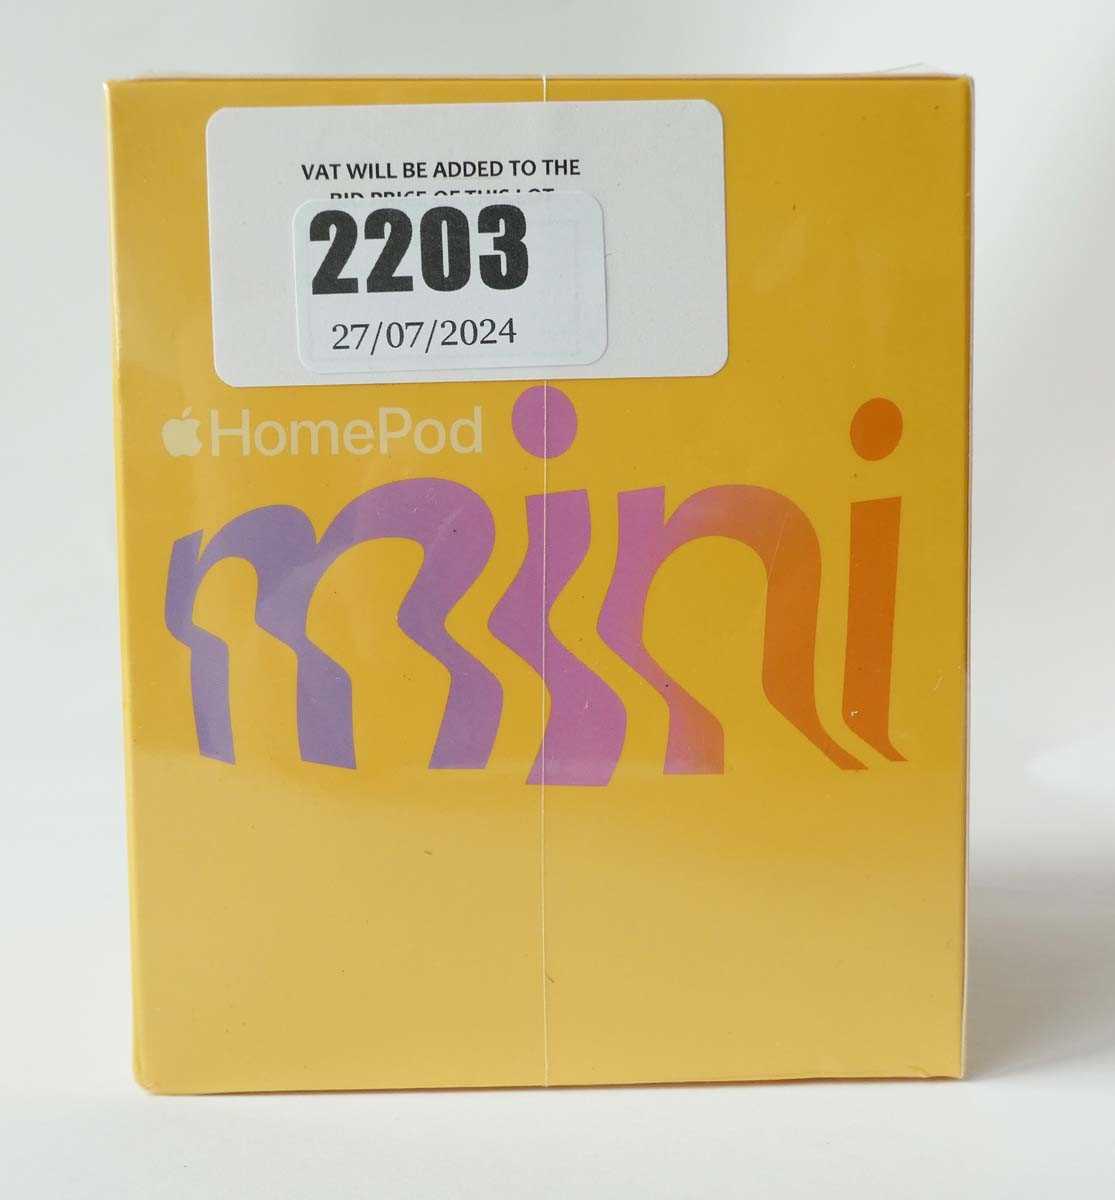 Lot 2203 - *Sealed* HomePod Mini